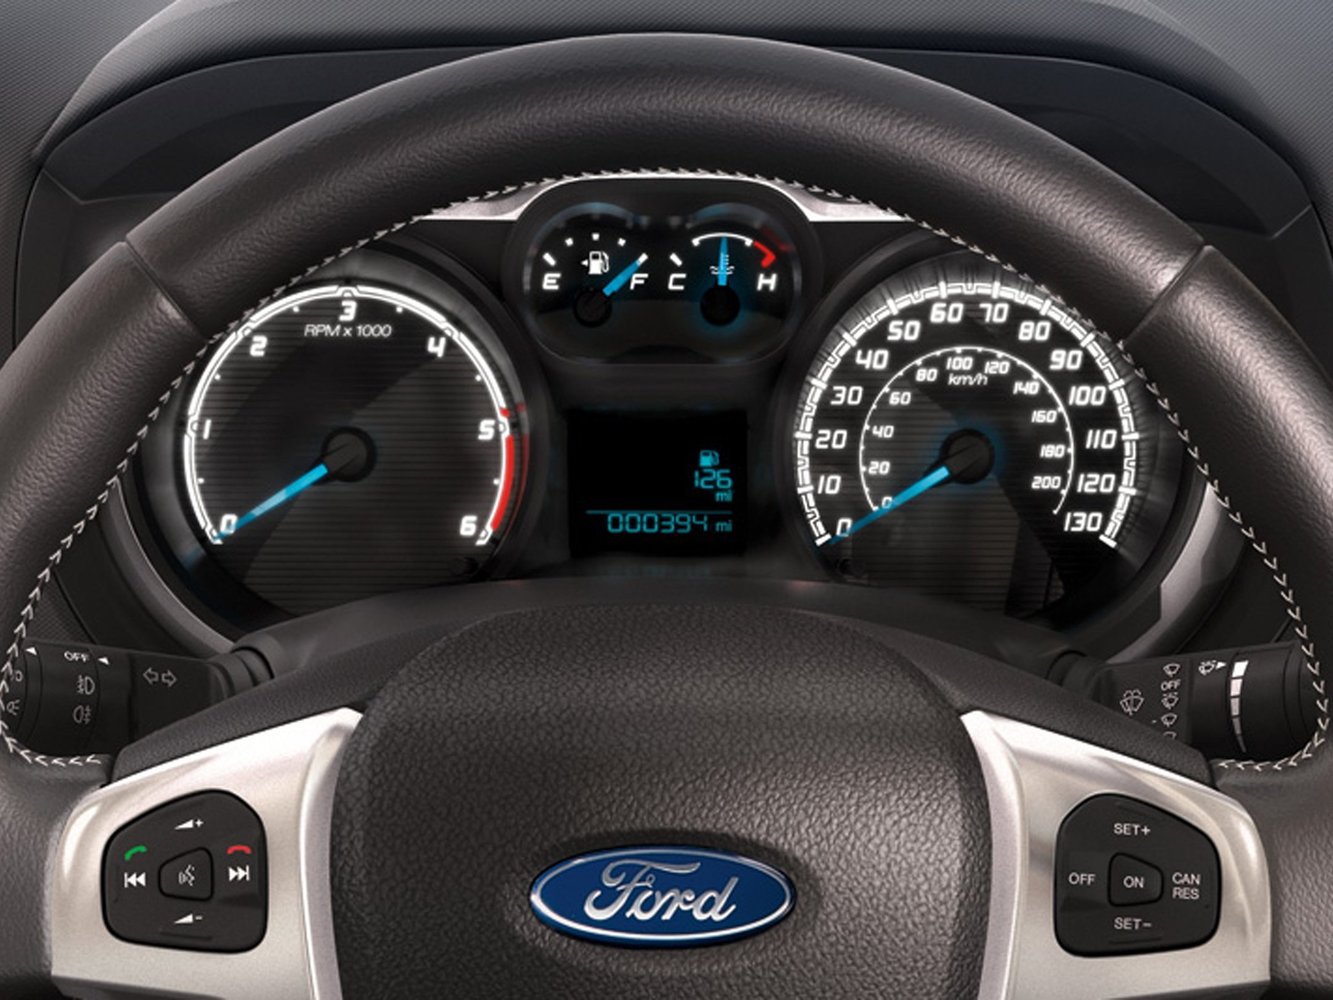 пикап 4 дв. Ford Ranger 2012 - 2015г выпуска модификация 2.2 AT (150 л.с.) 4×4